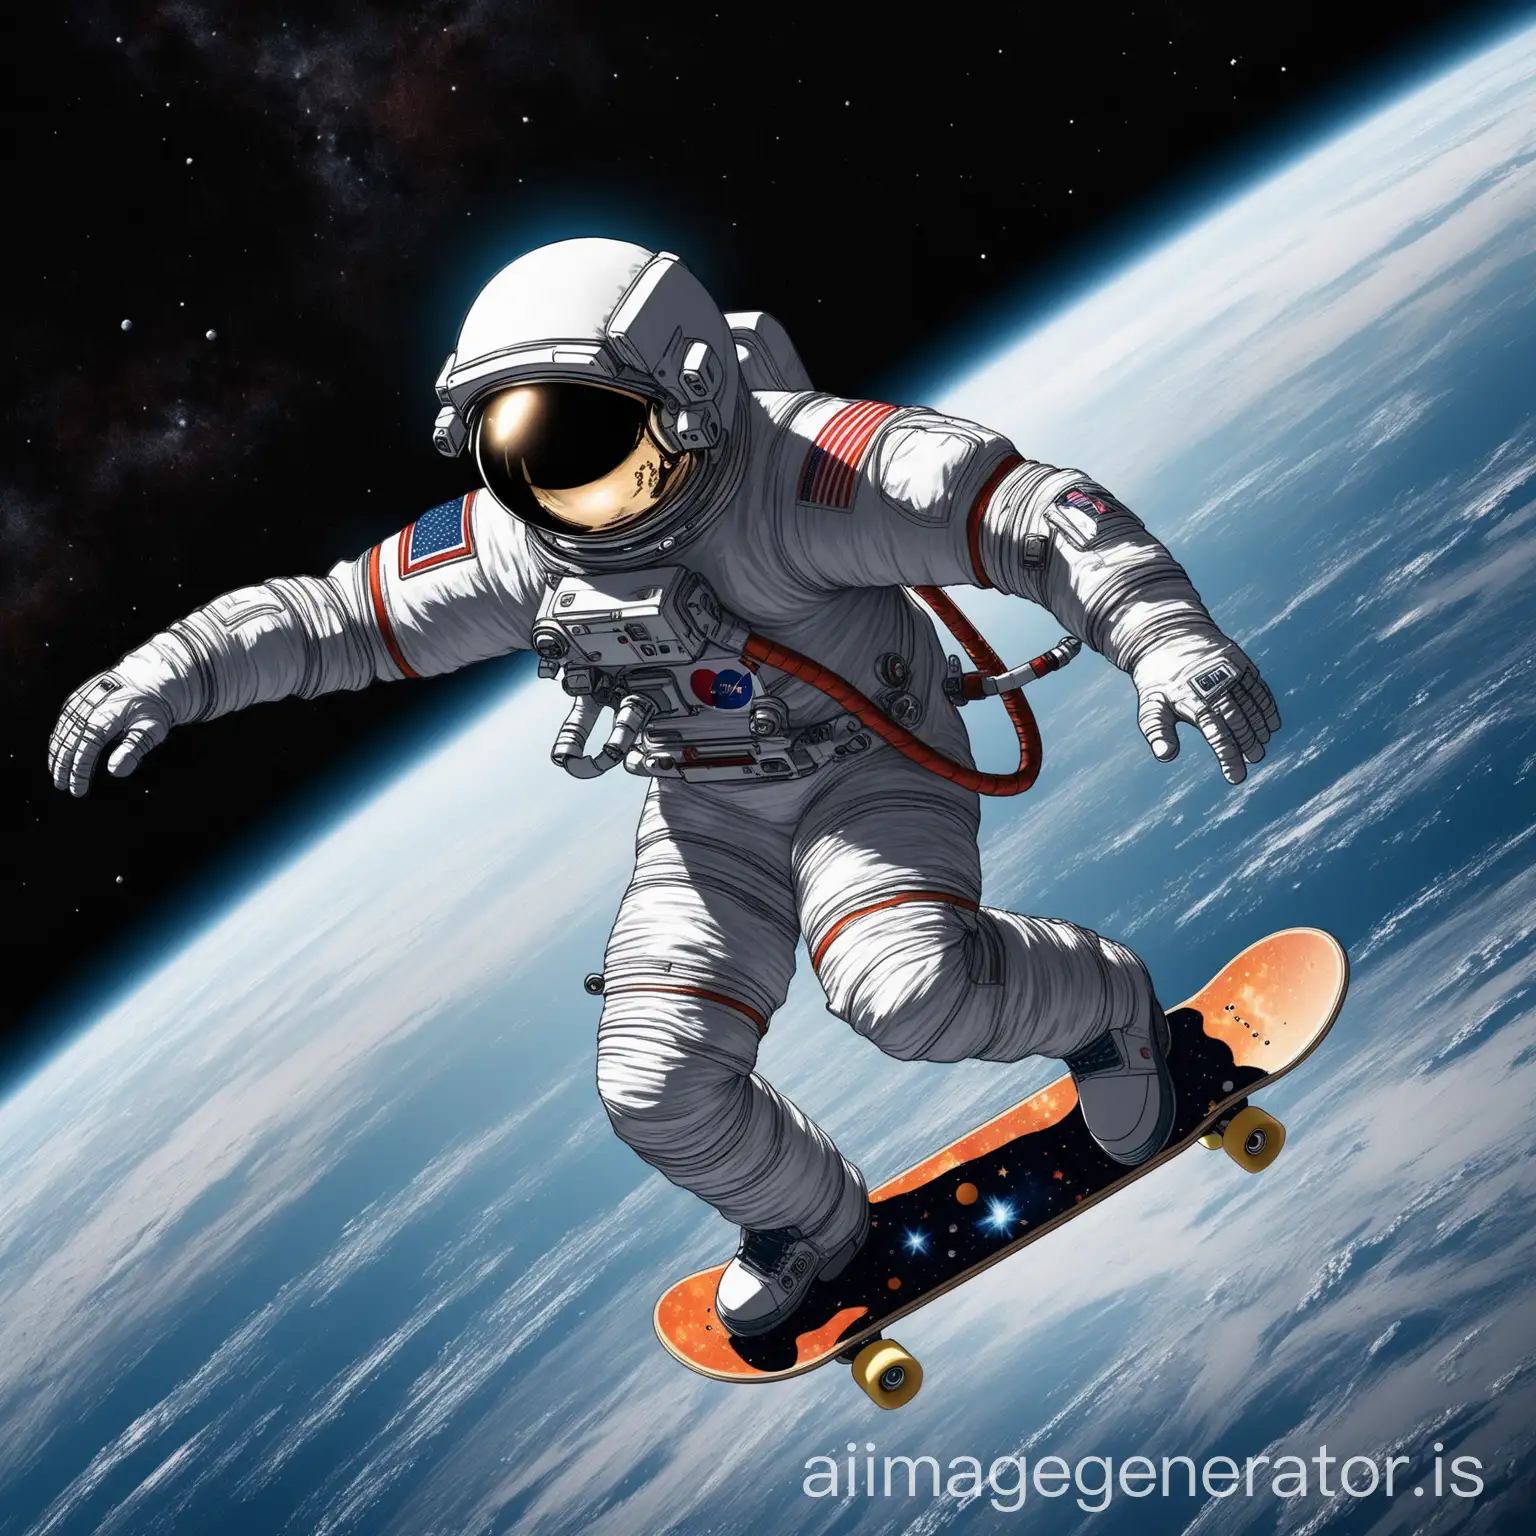 an astronaut in space riding a skateboard